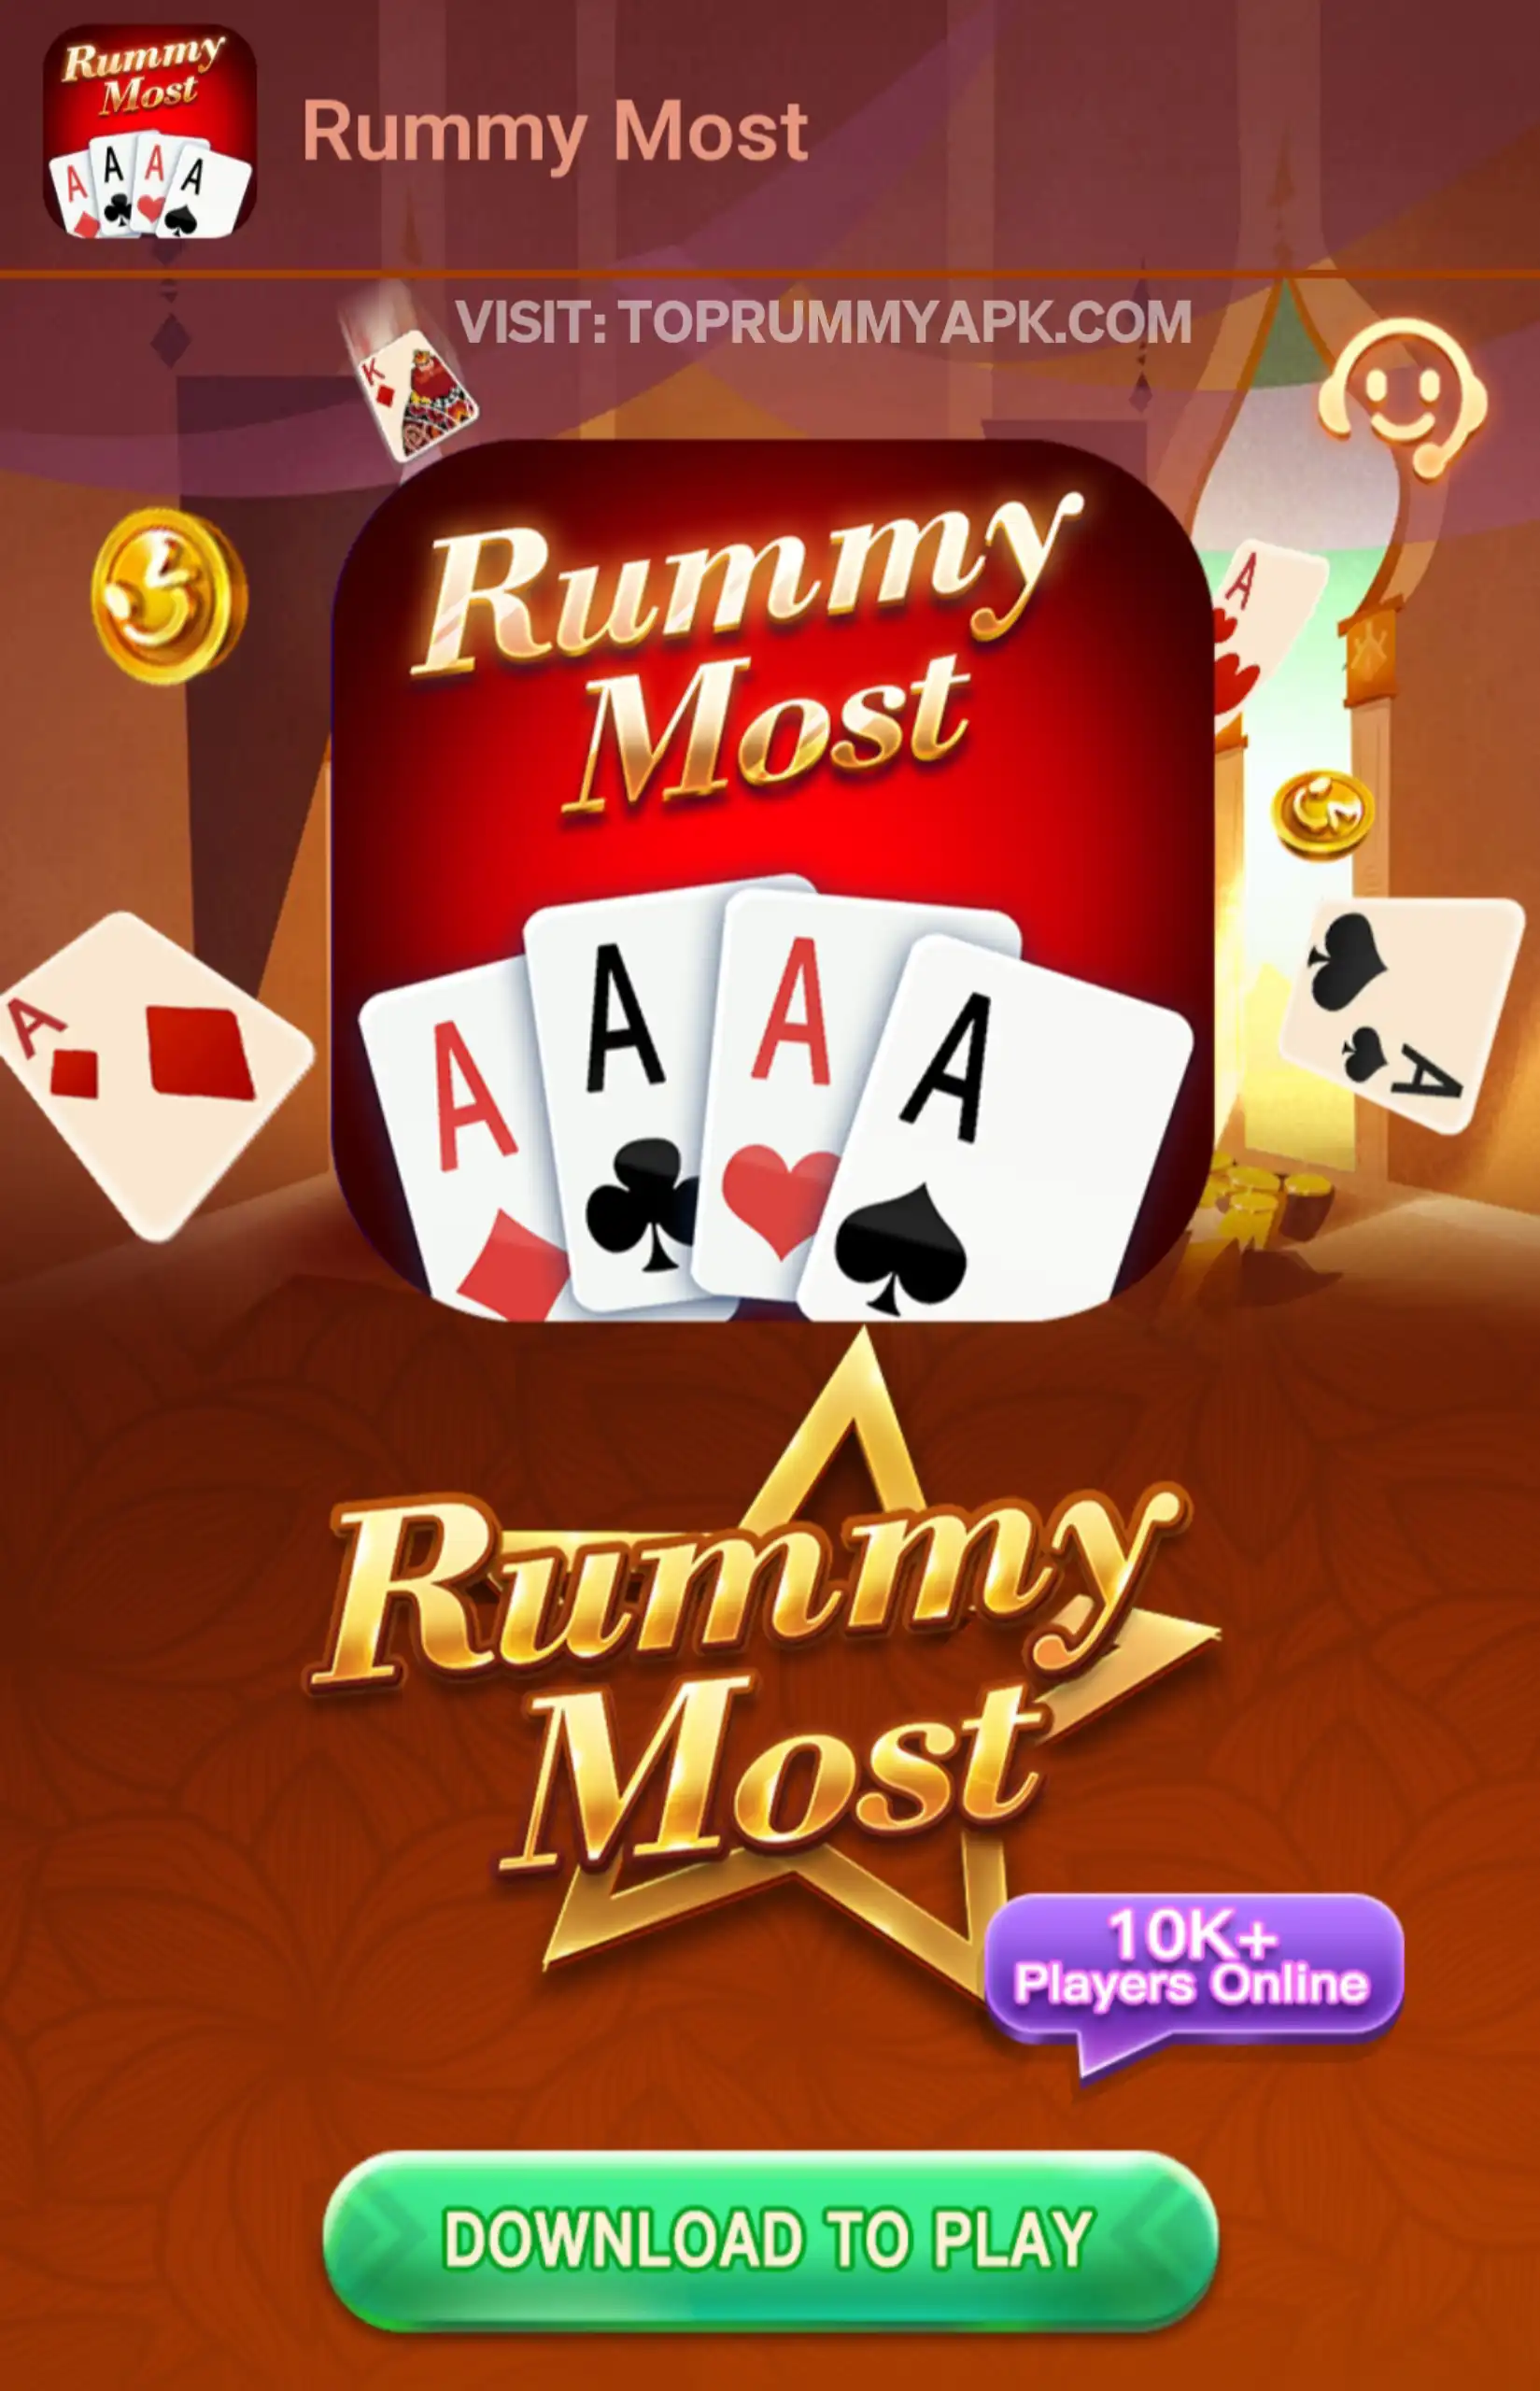 Rummy Most App Top Rummy App